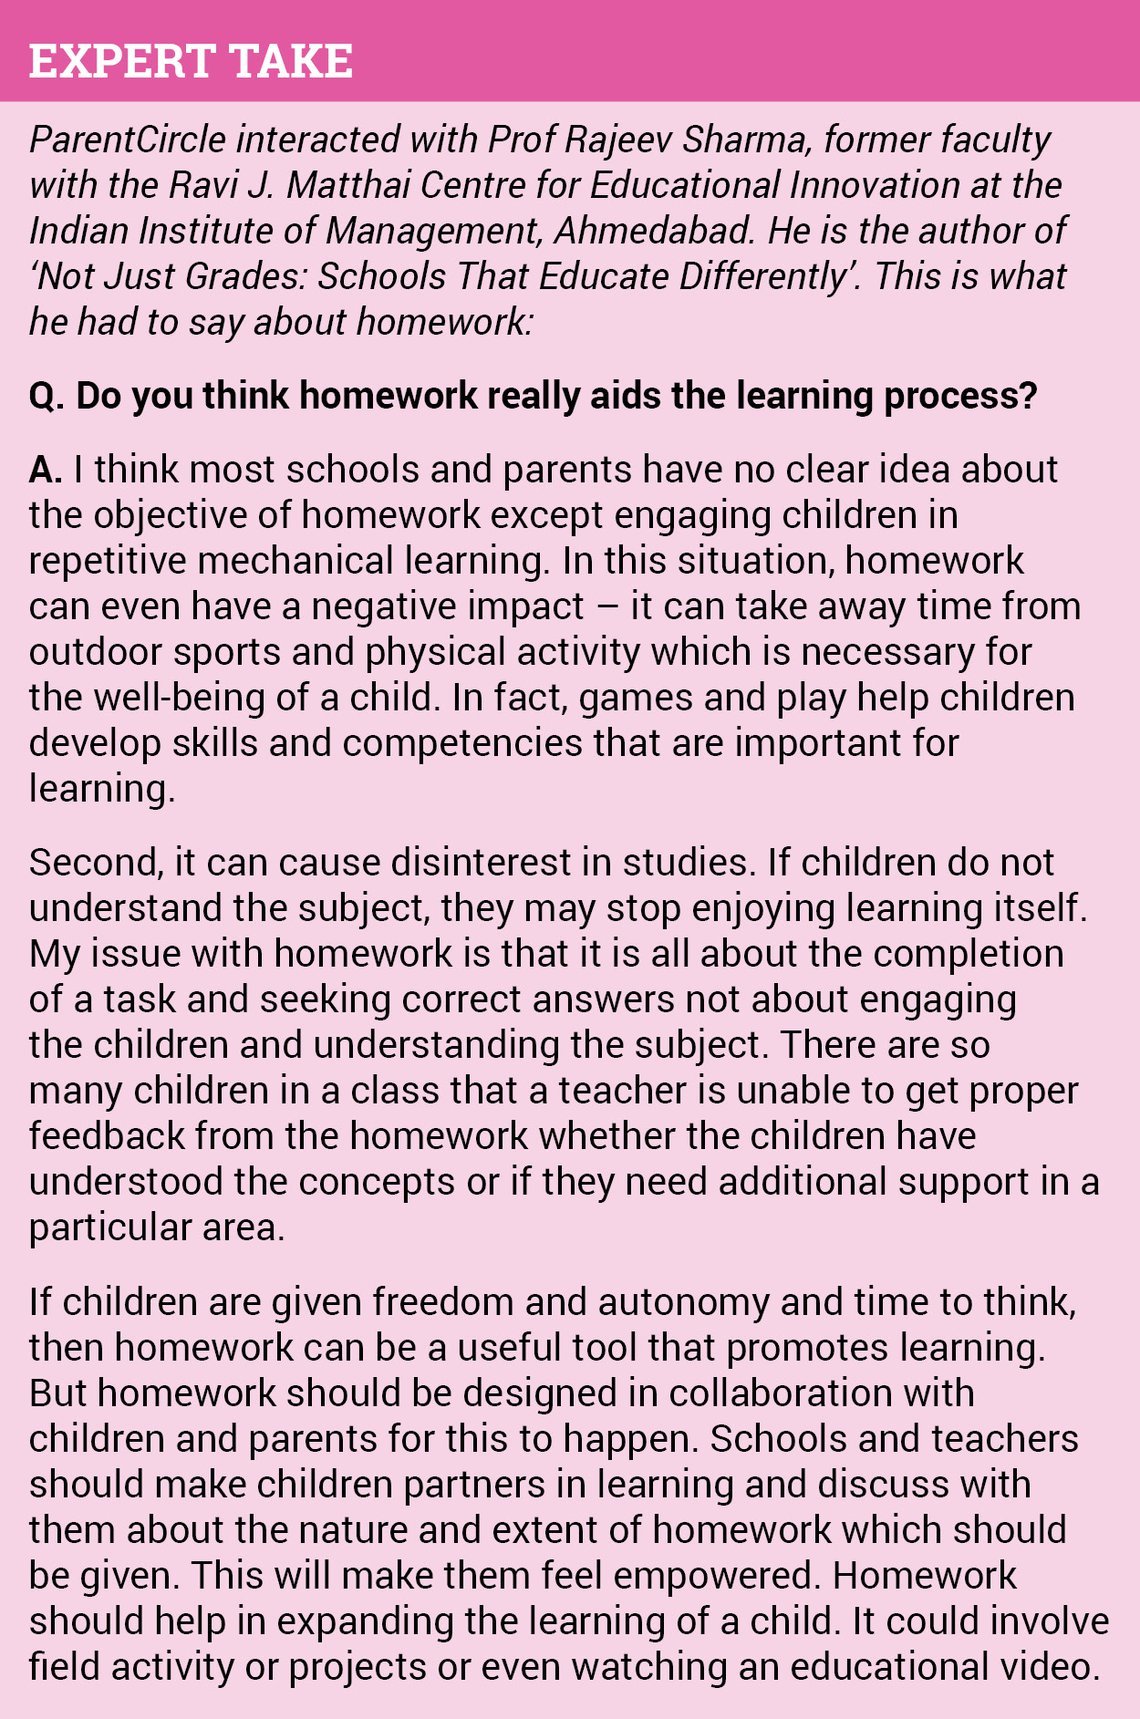 Does Homework Really Enhance Learning?